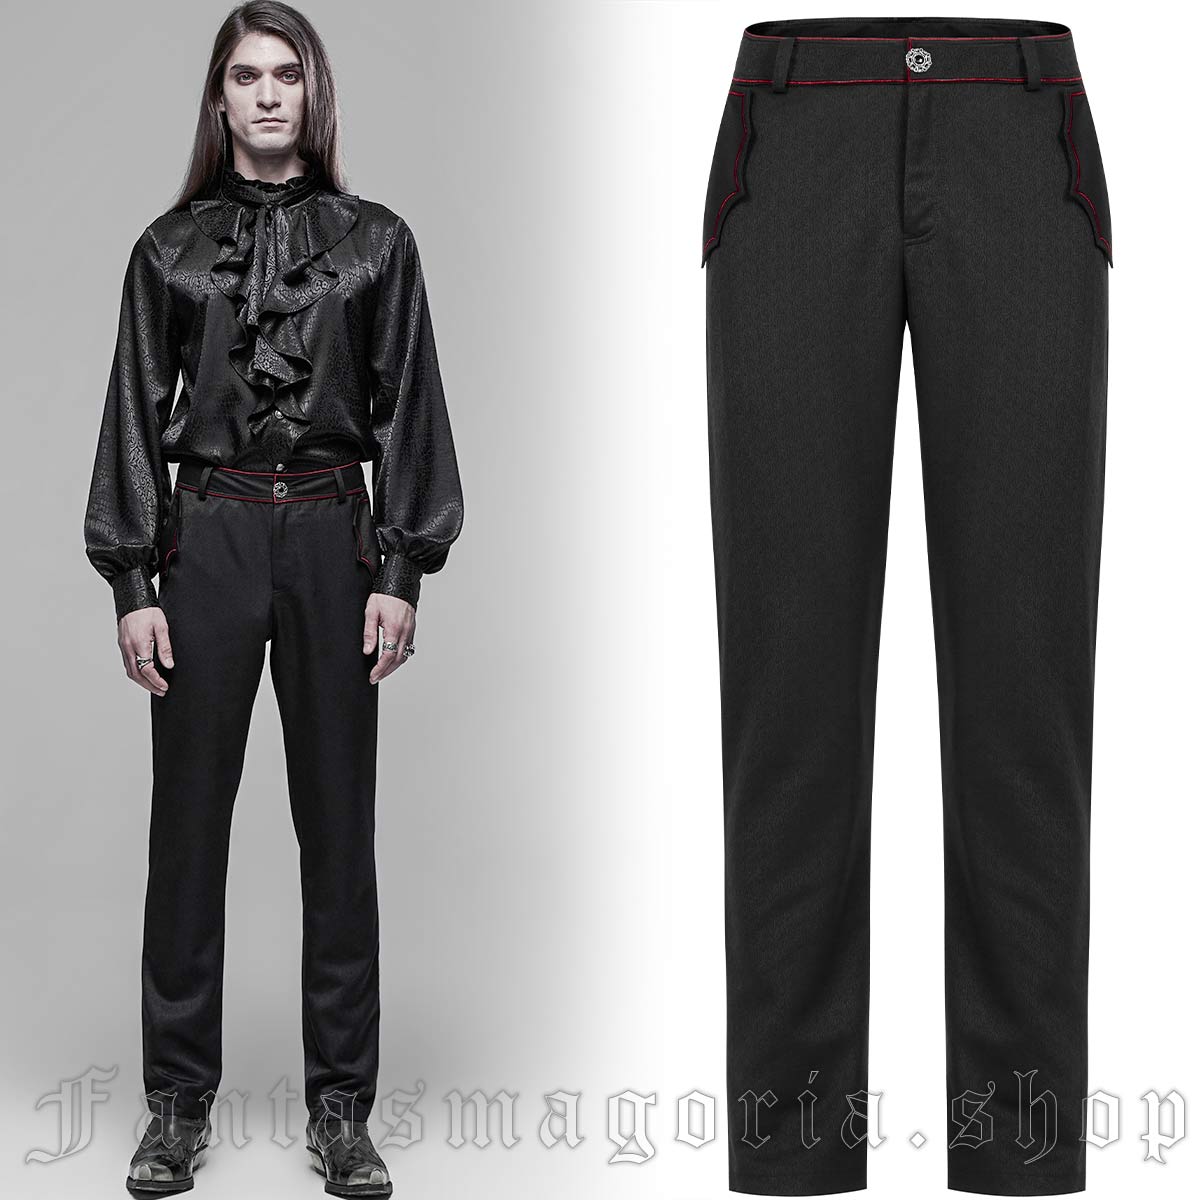 Men's Gothic classic black slim fit batwing detail pockets trousers. - Punk Rave - WK-481/BK-RD